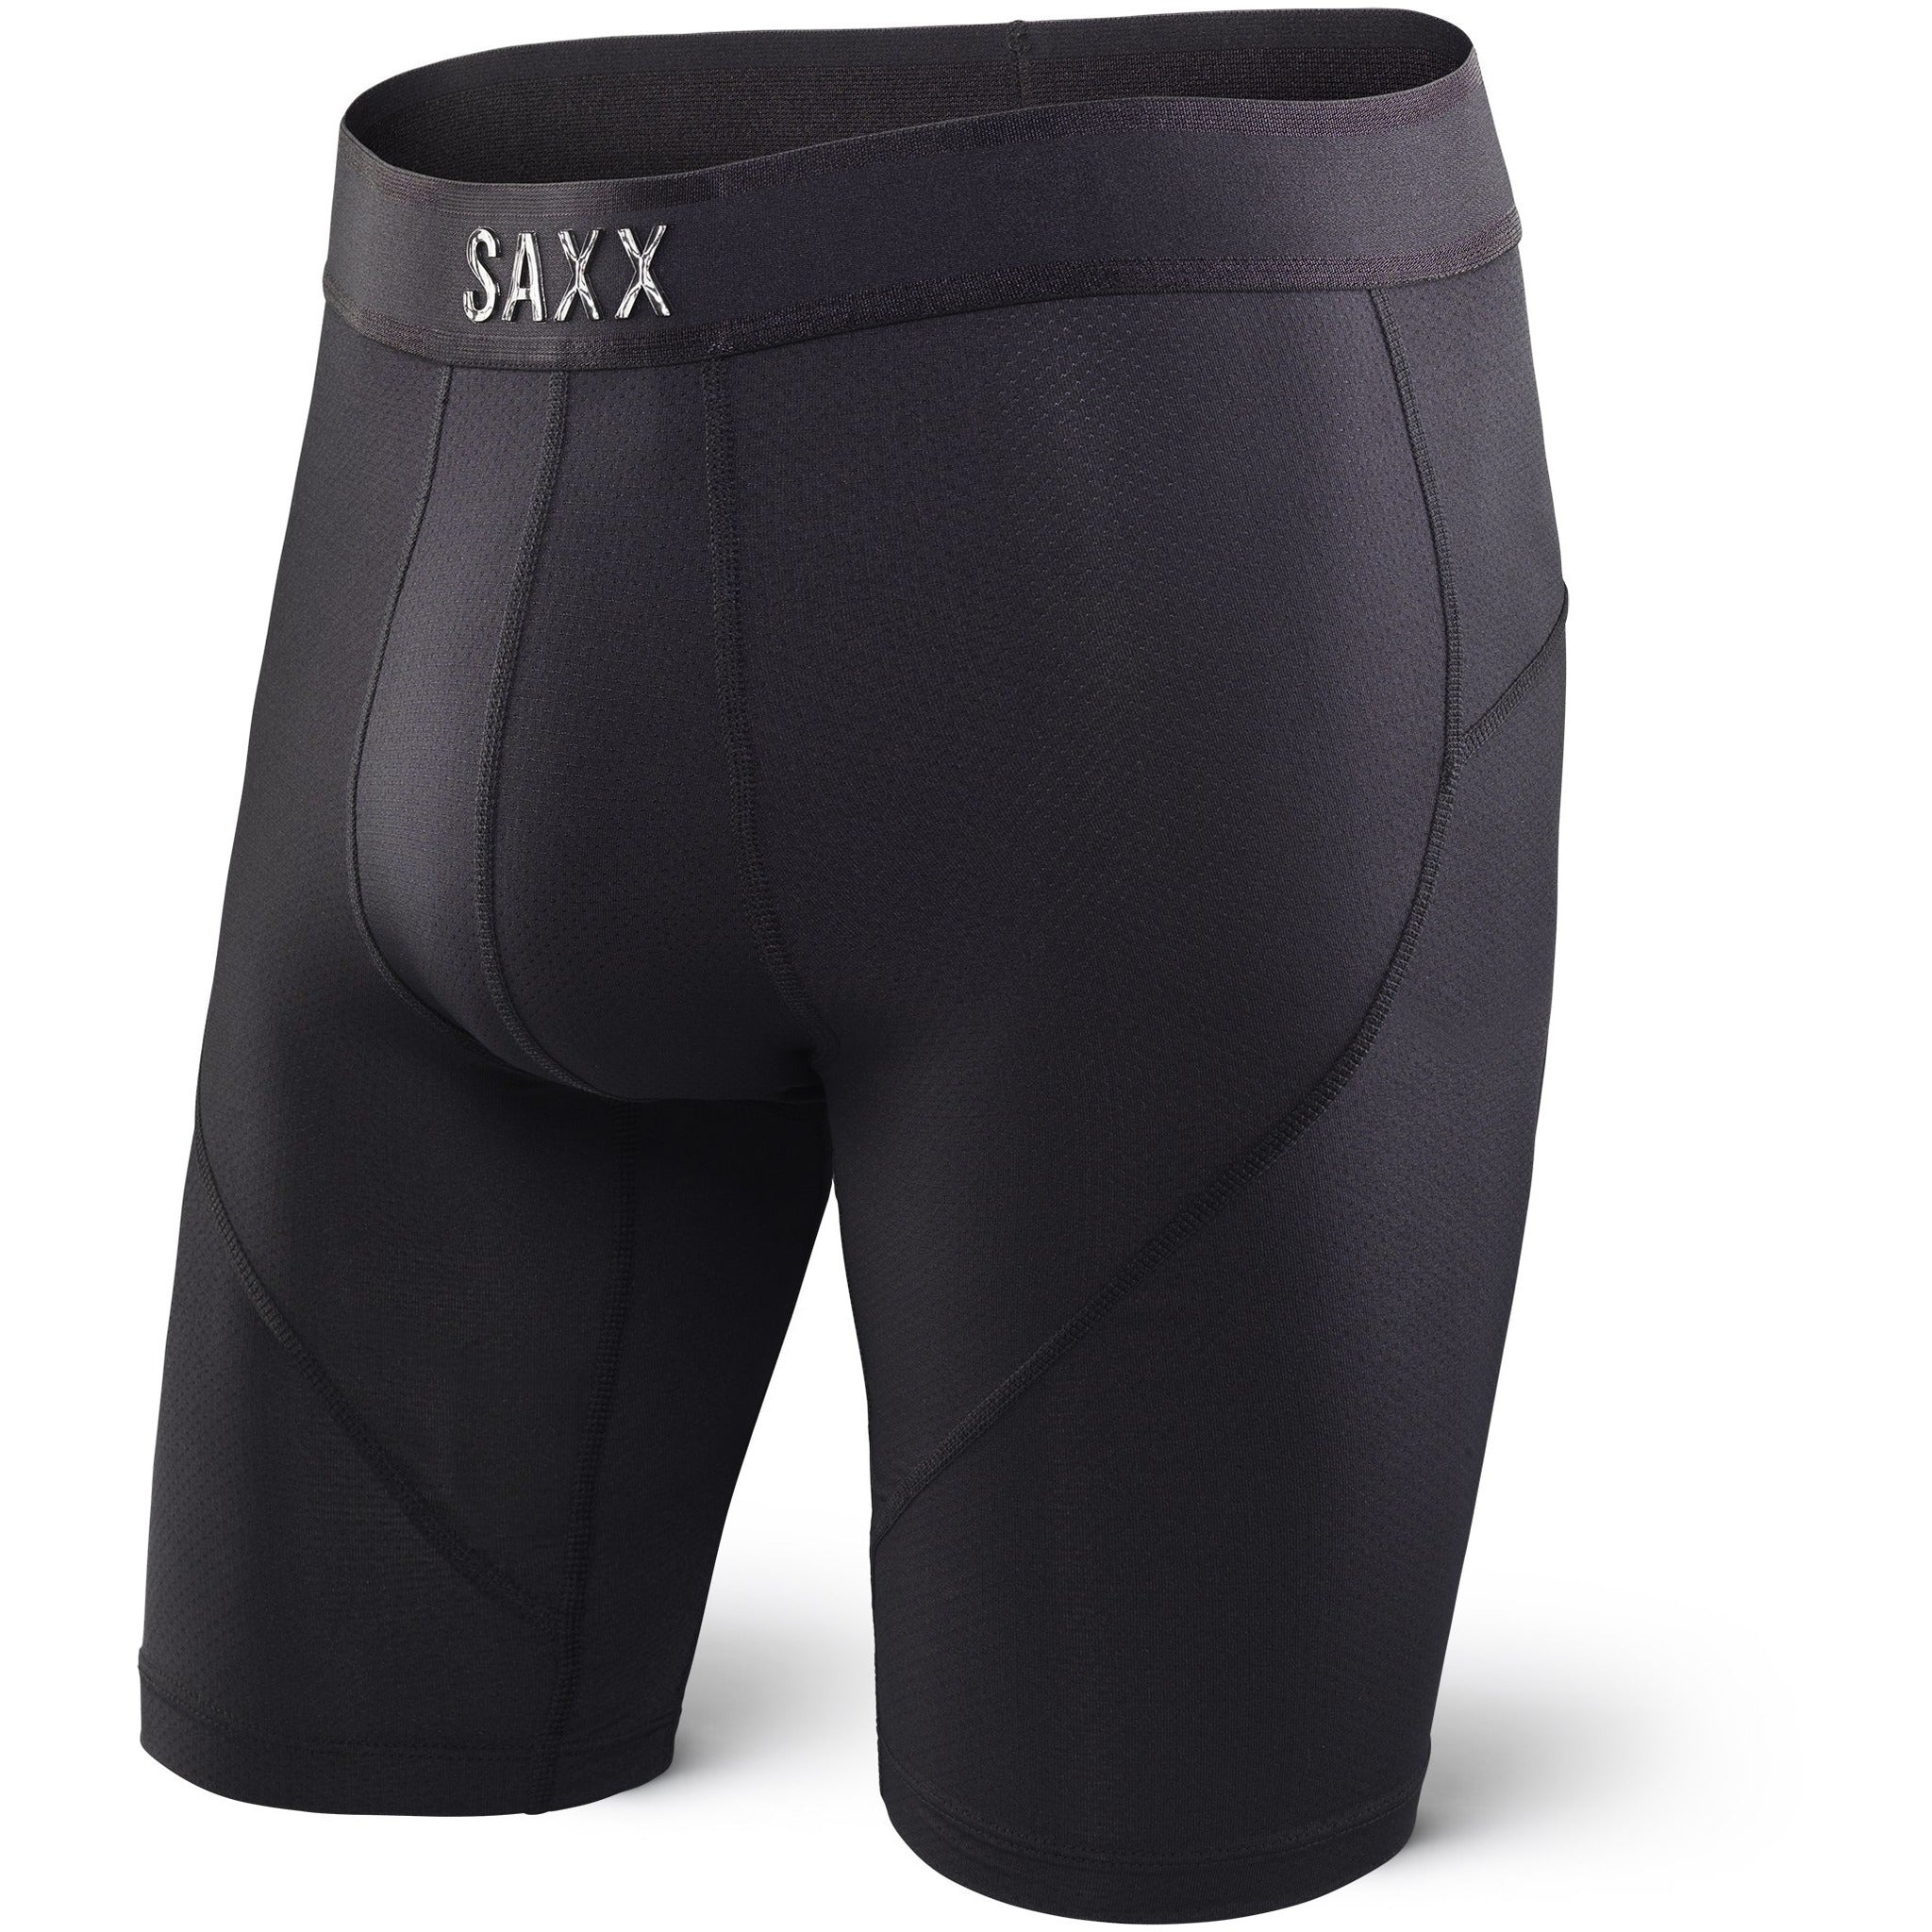 Saxx Men's Underwear Long Leg Boxer Briefs – Kinetic Light